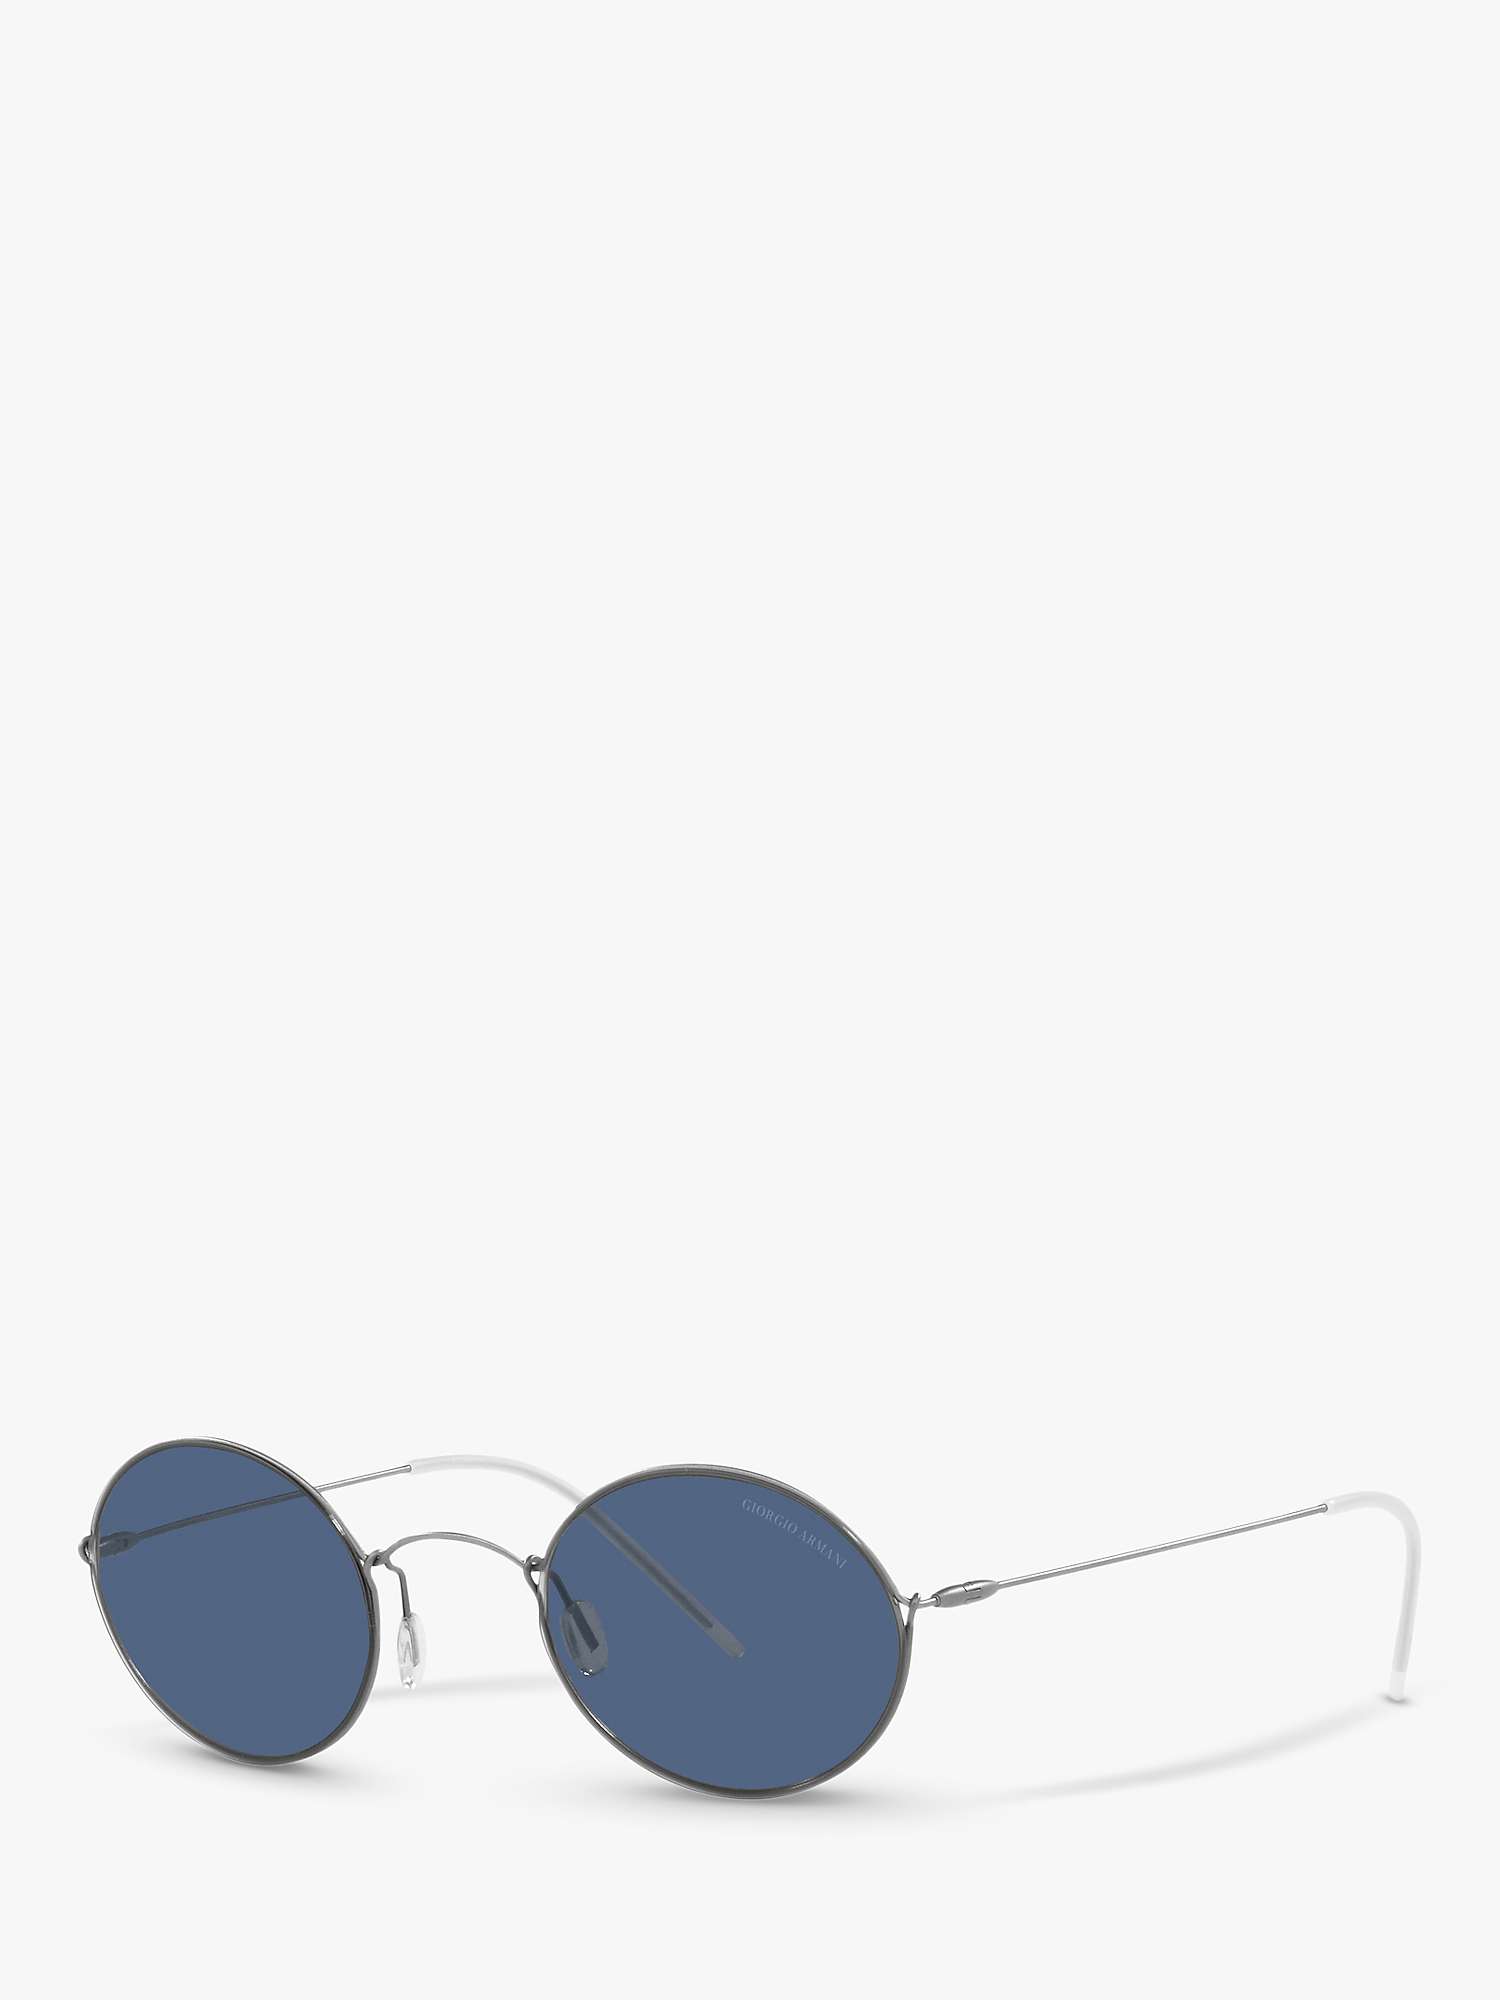 Buy Giorgio Armani AR6115T Men's Oval Sunglasses, Grey/Blue Online at johnlewis.com